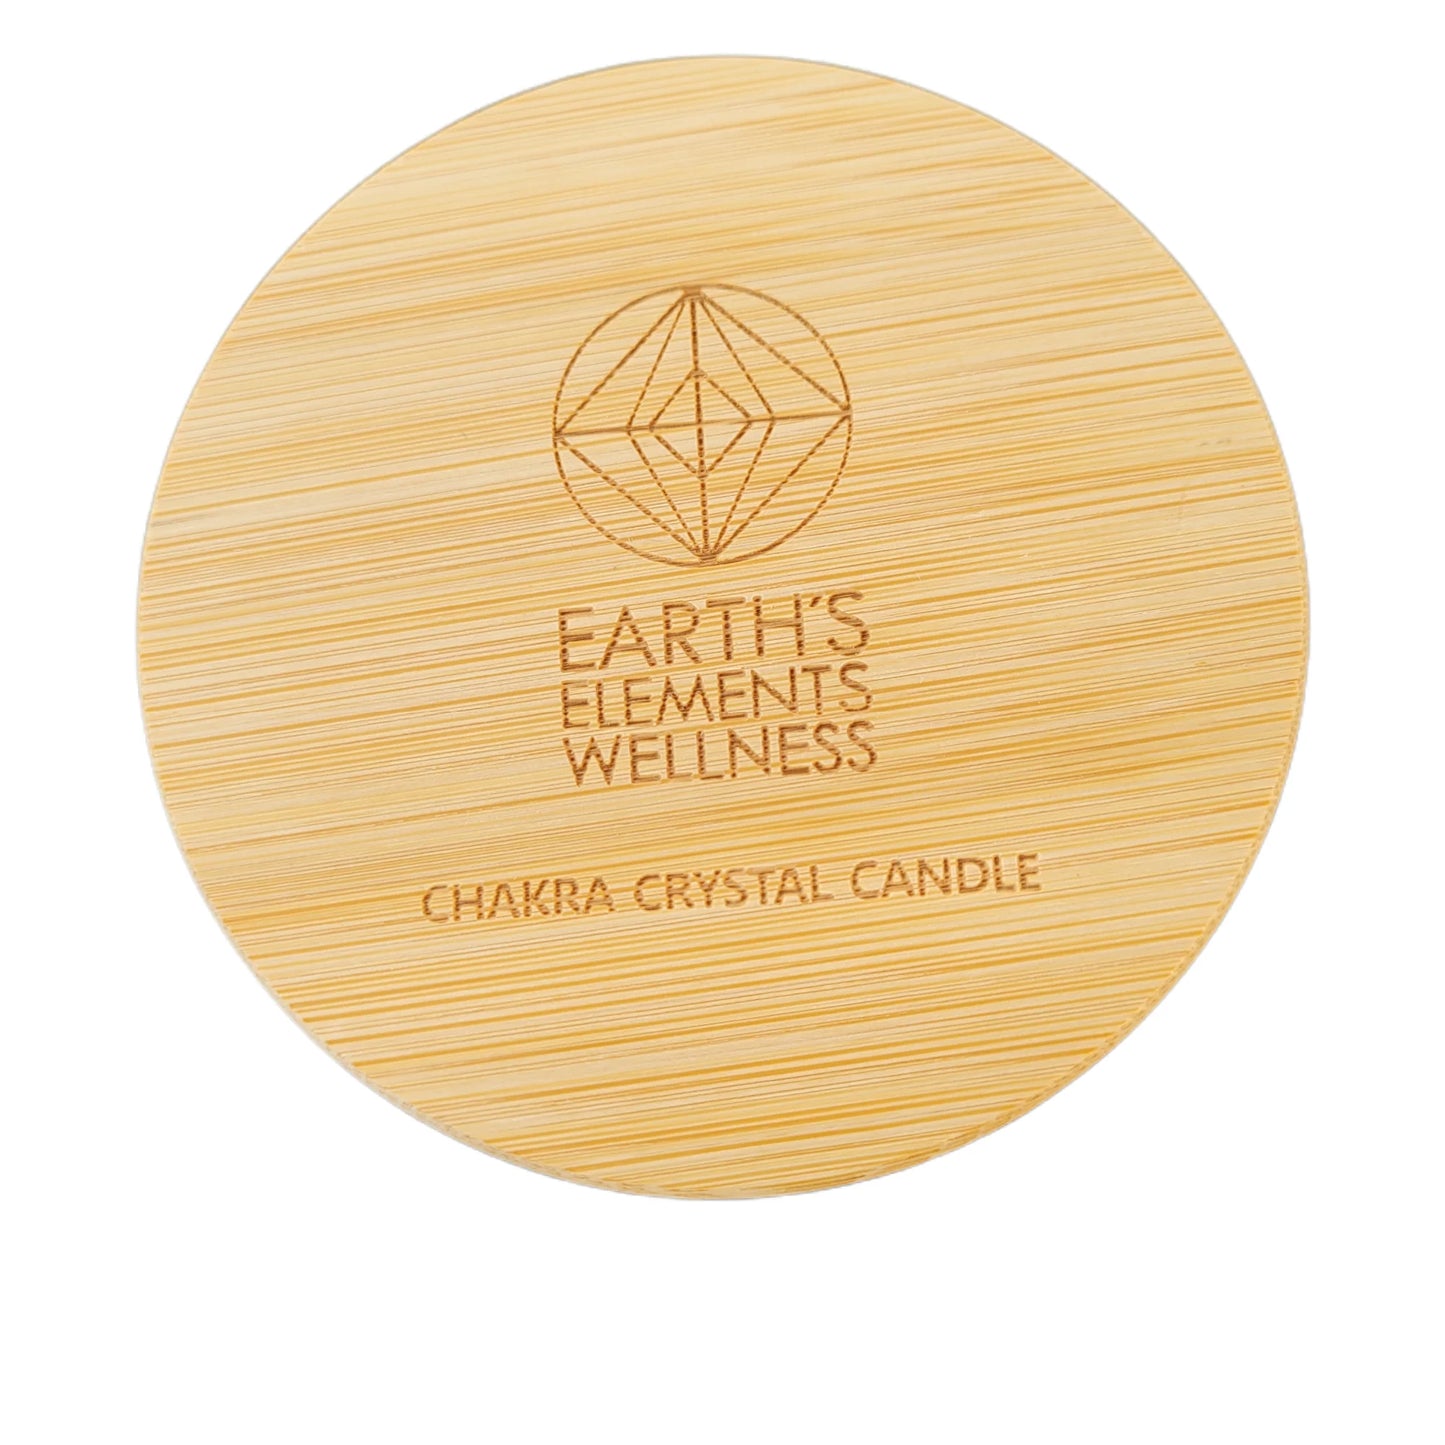 Chakra Crystal Candle